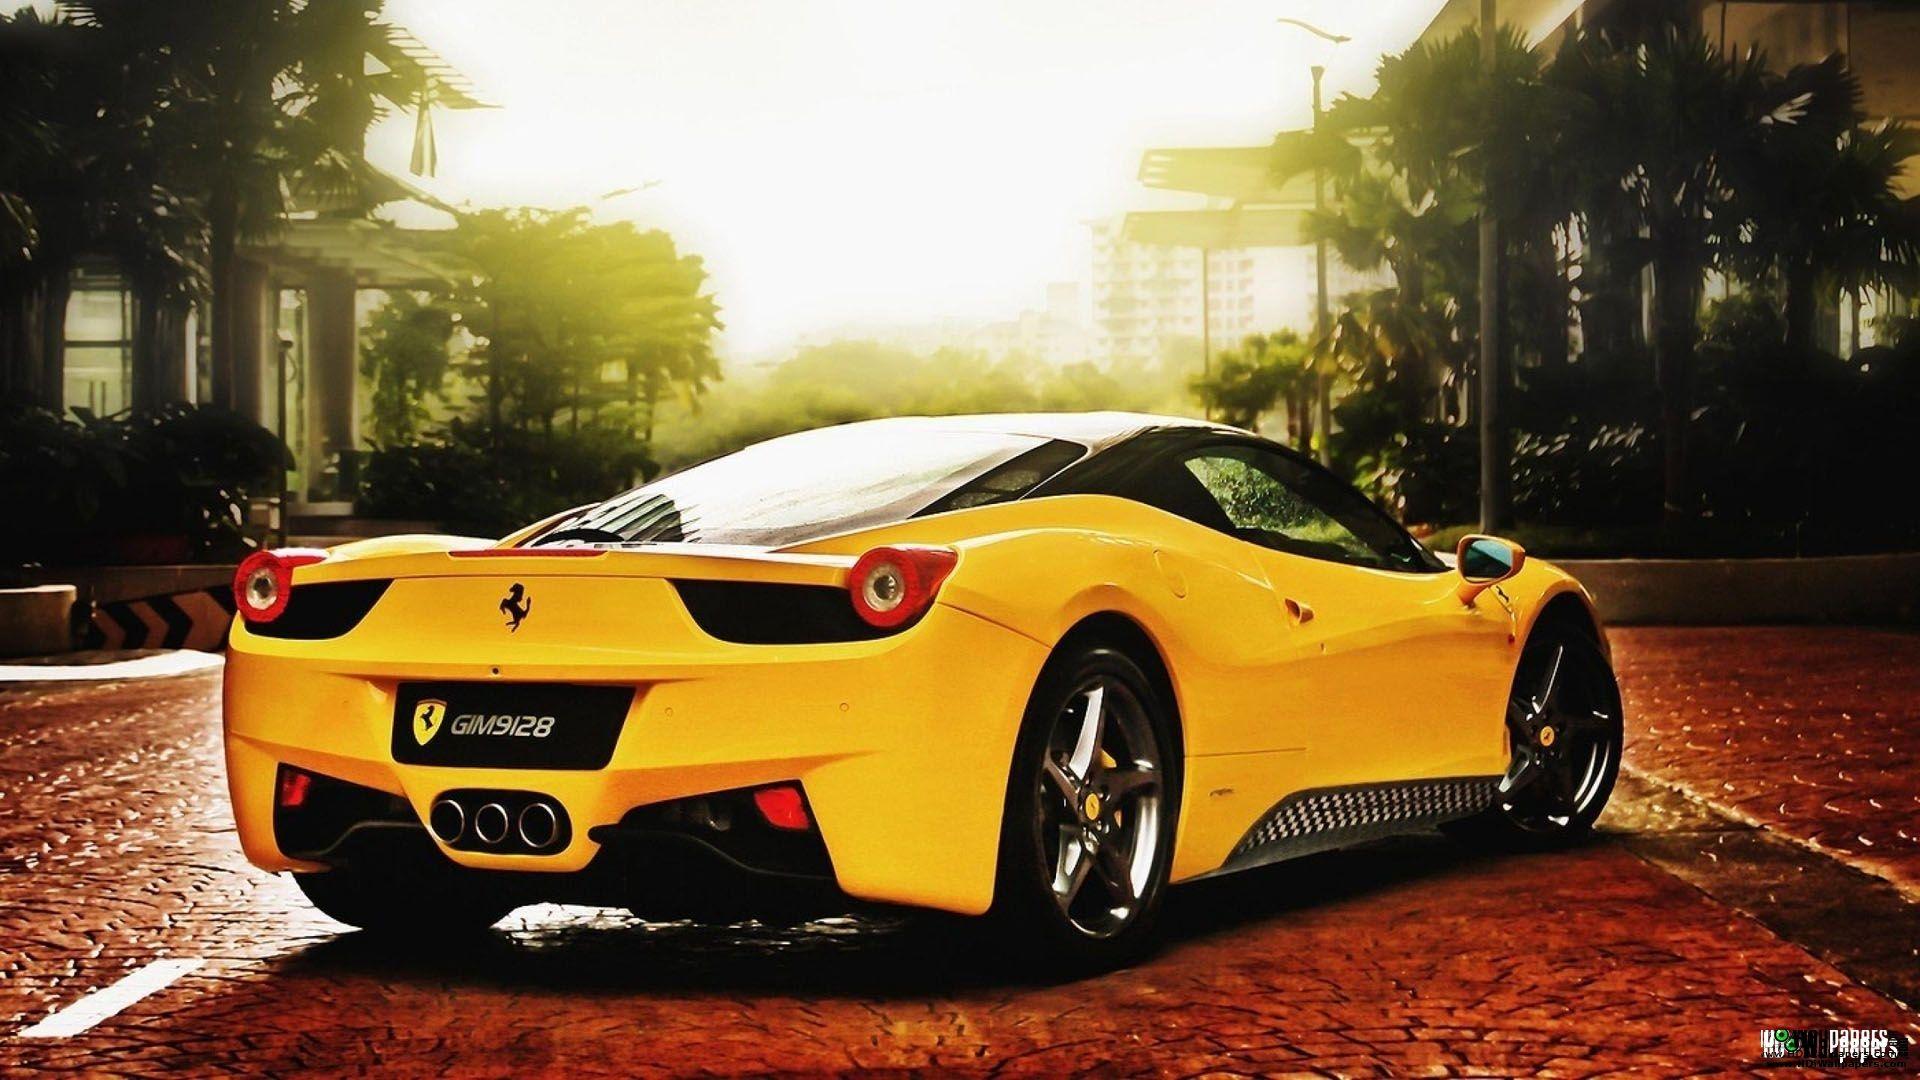 Ferrari Cars Wallpaper, Full HD 1080p, Best HD Ferrari Cars Pics